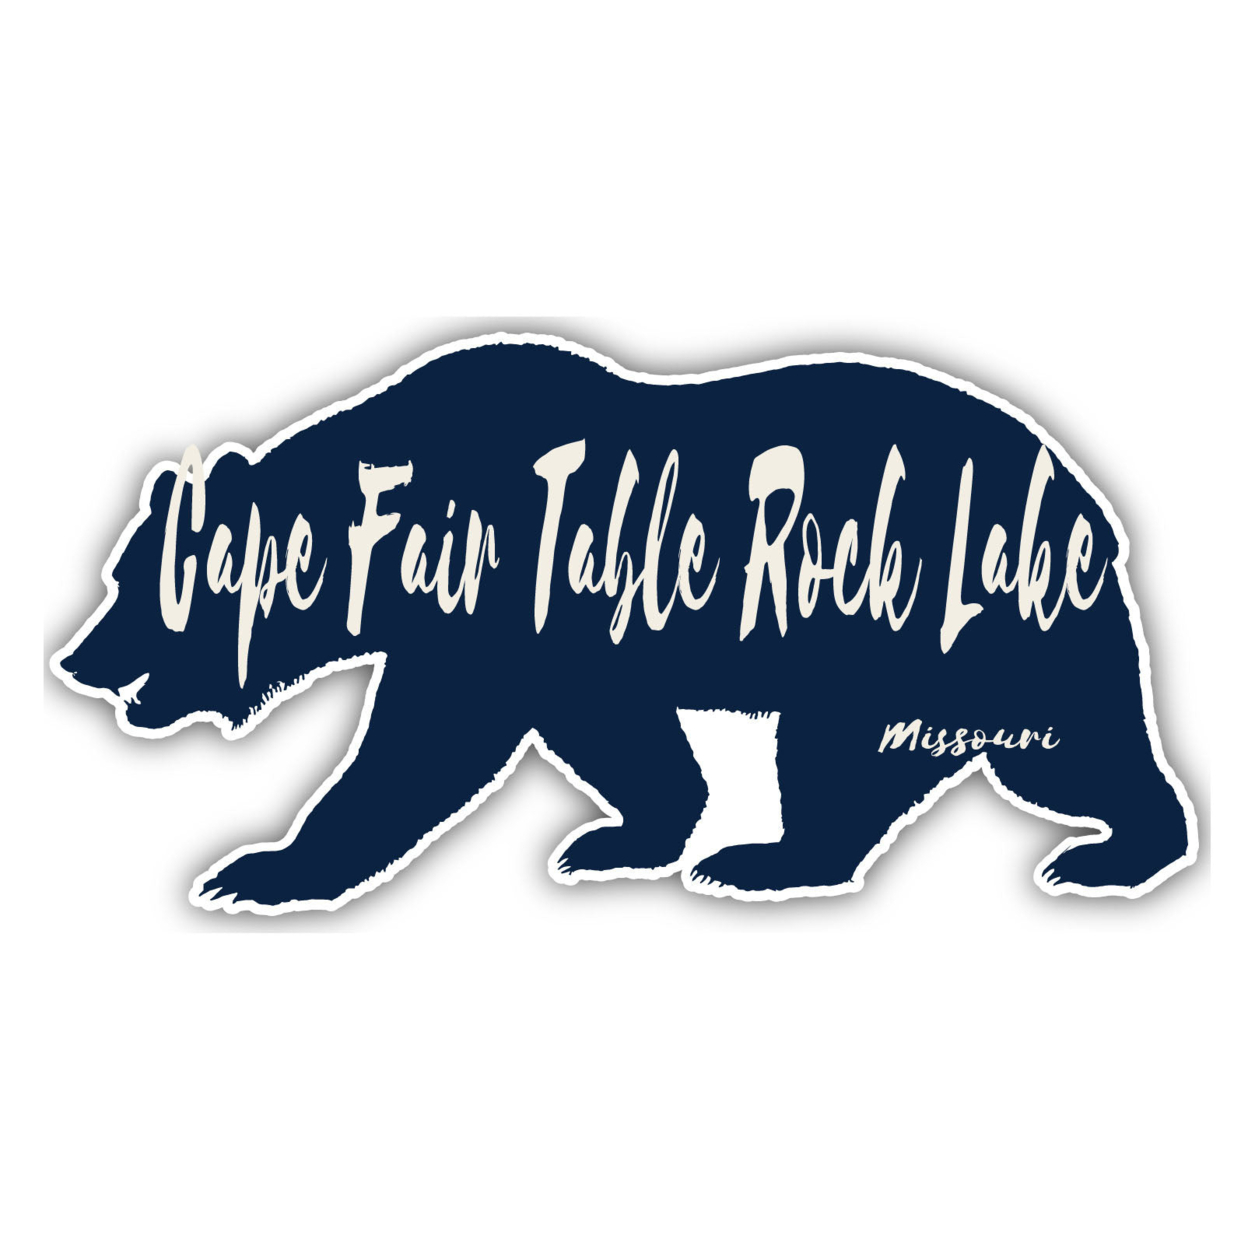 Cape Fair Table Rock Lake Missouri Souvenir Decorative Stickers (Choose Theme And Size) - 4-Pack, 10-Inch, Bear